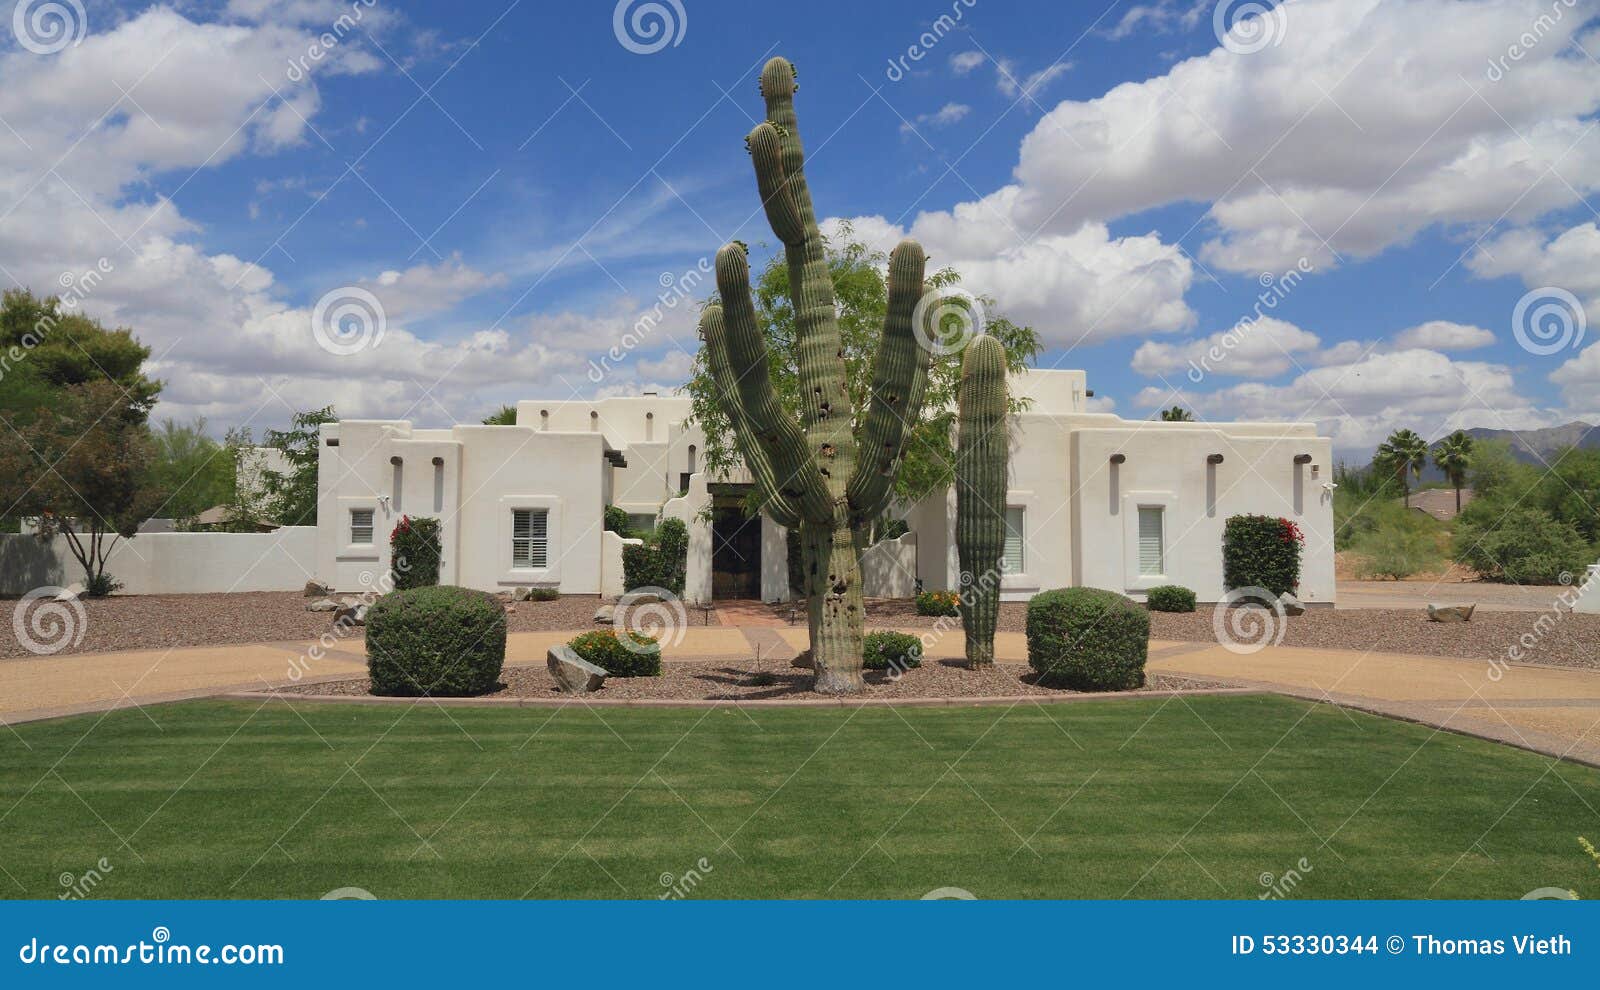 usa, arizona/phoenix: pueblo revival adobe house/saguaro front yard